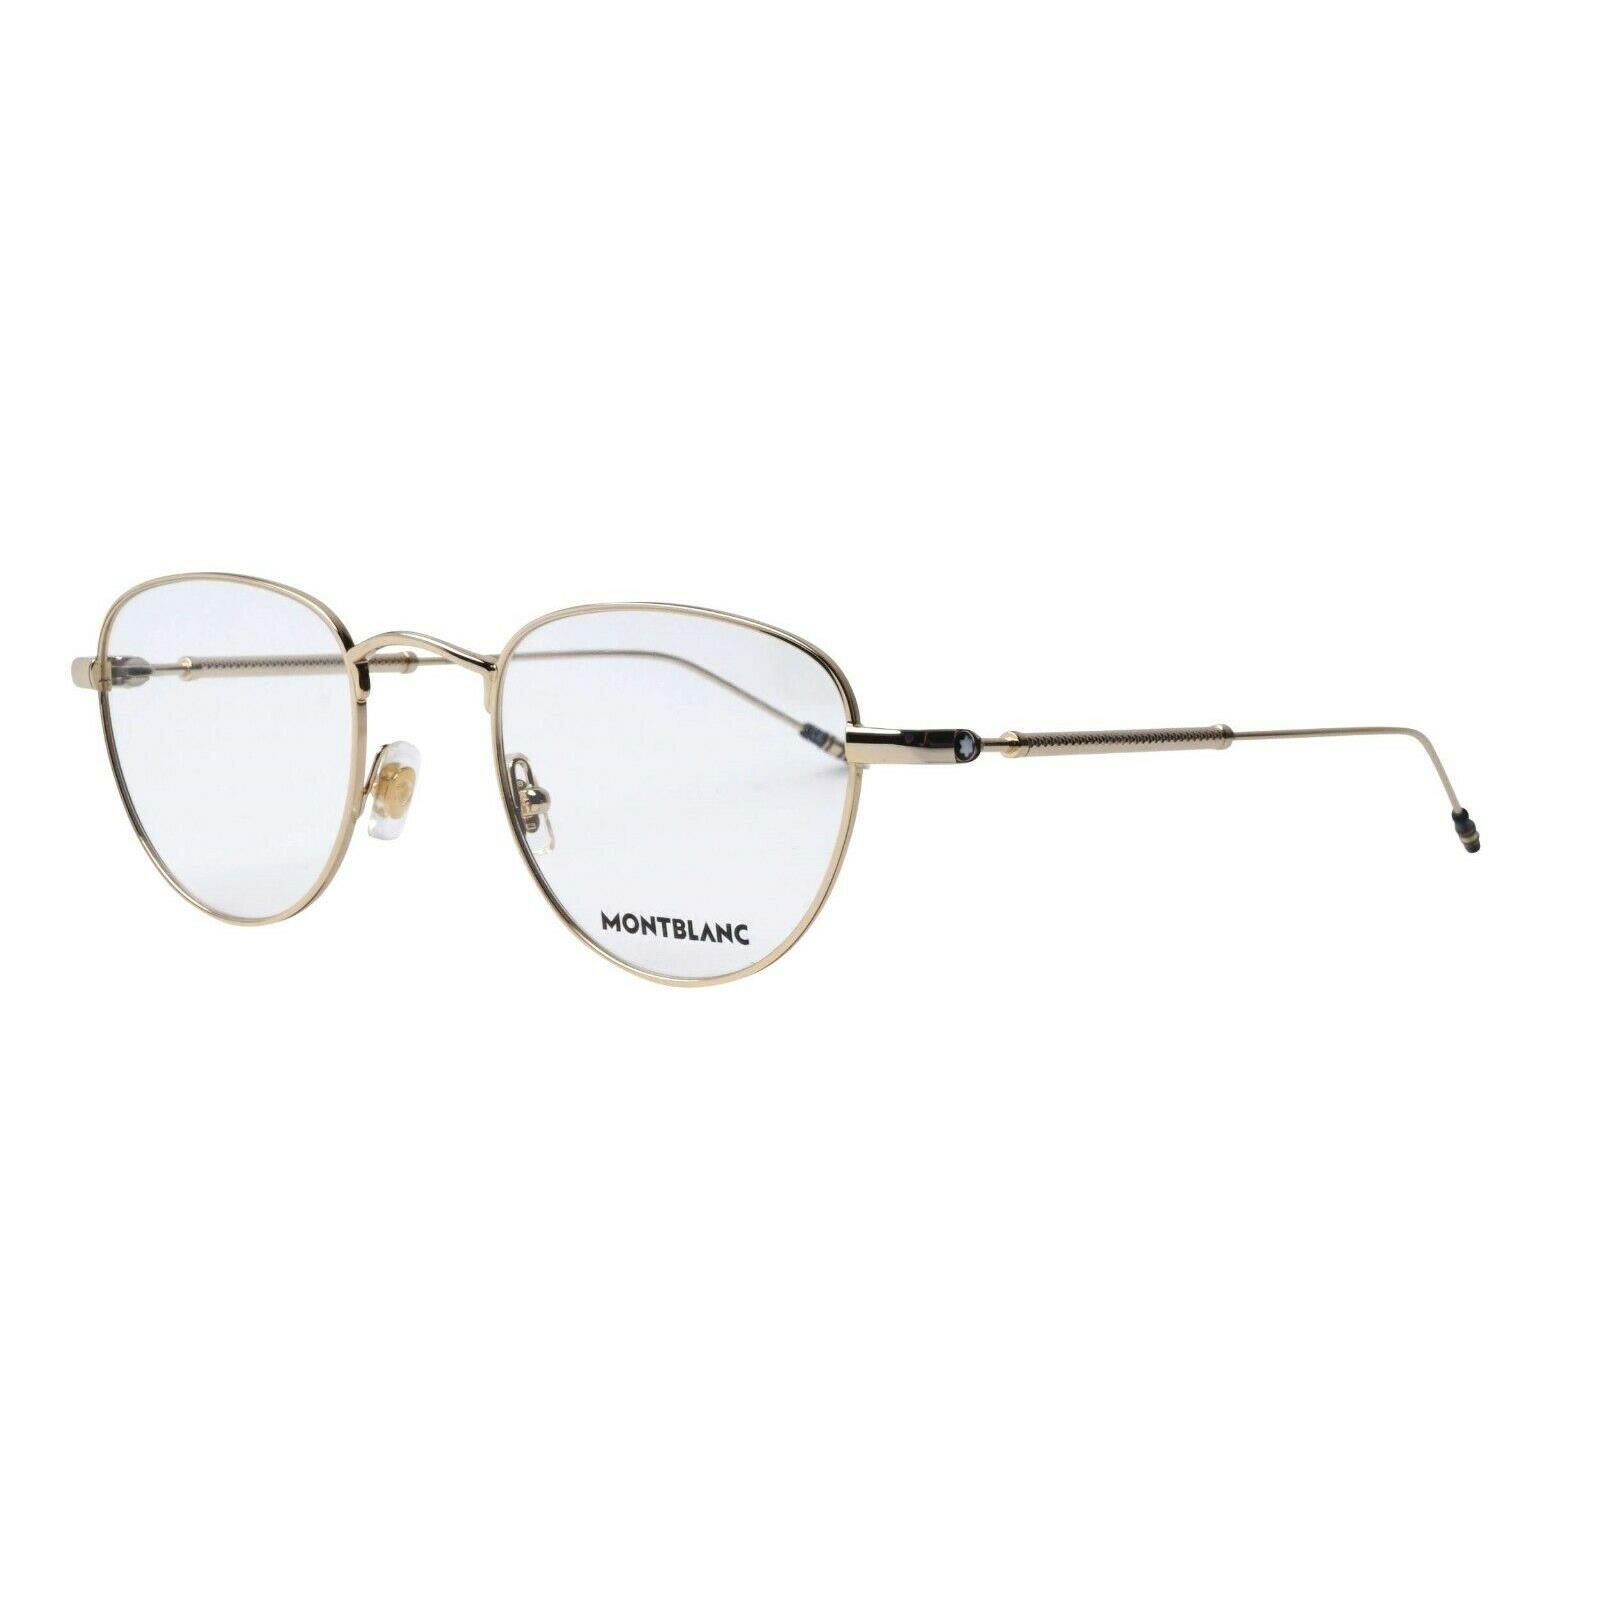 Montblanc Mont Blanc Eyeglasses MB0111o-002 Gold Frame Clear Lenses